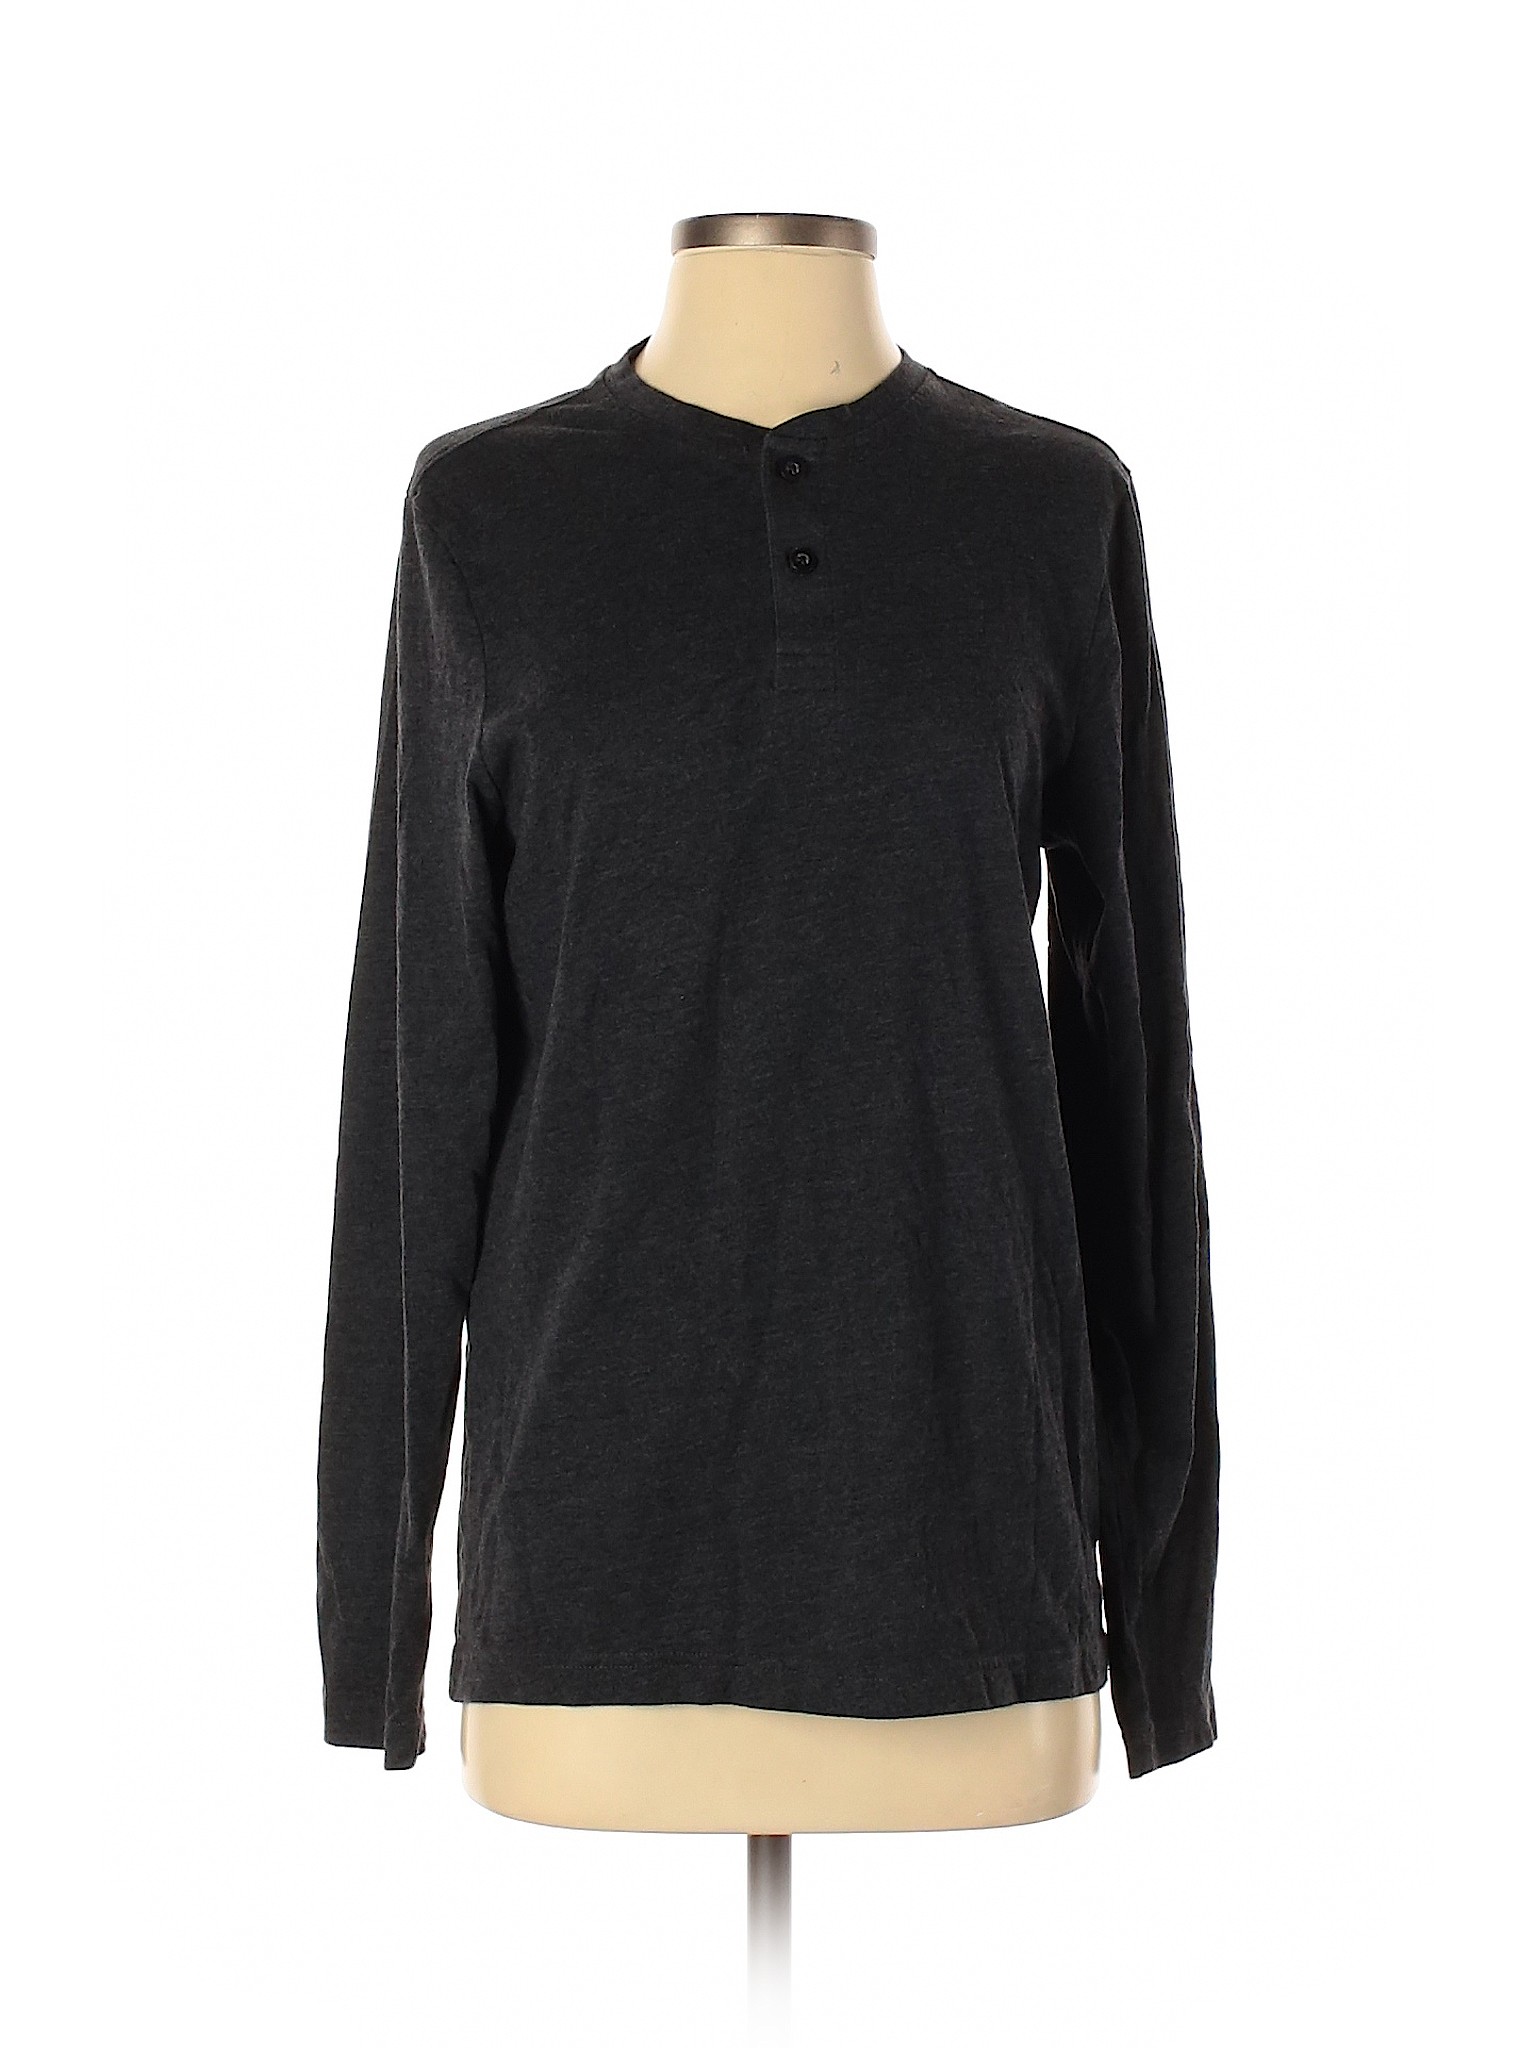 Croft & Barrow Women Gray Long Sleeve T-Shirt S | eBay